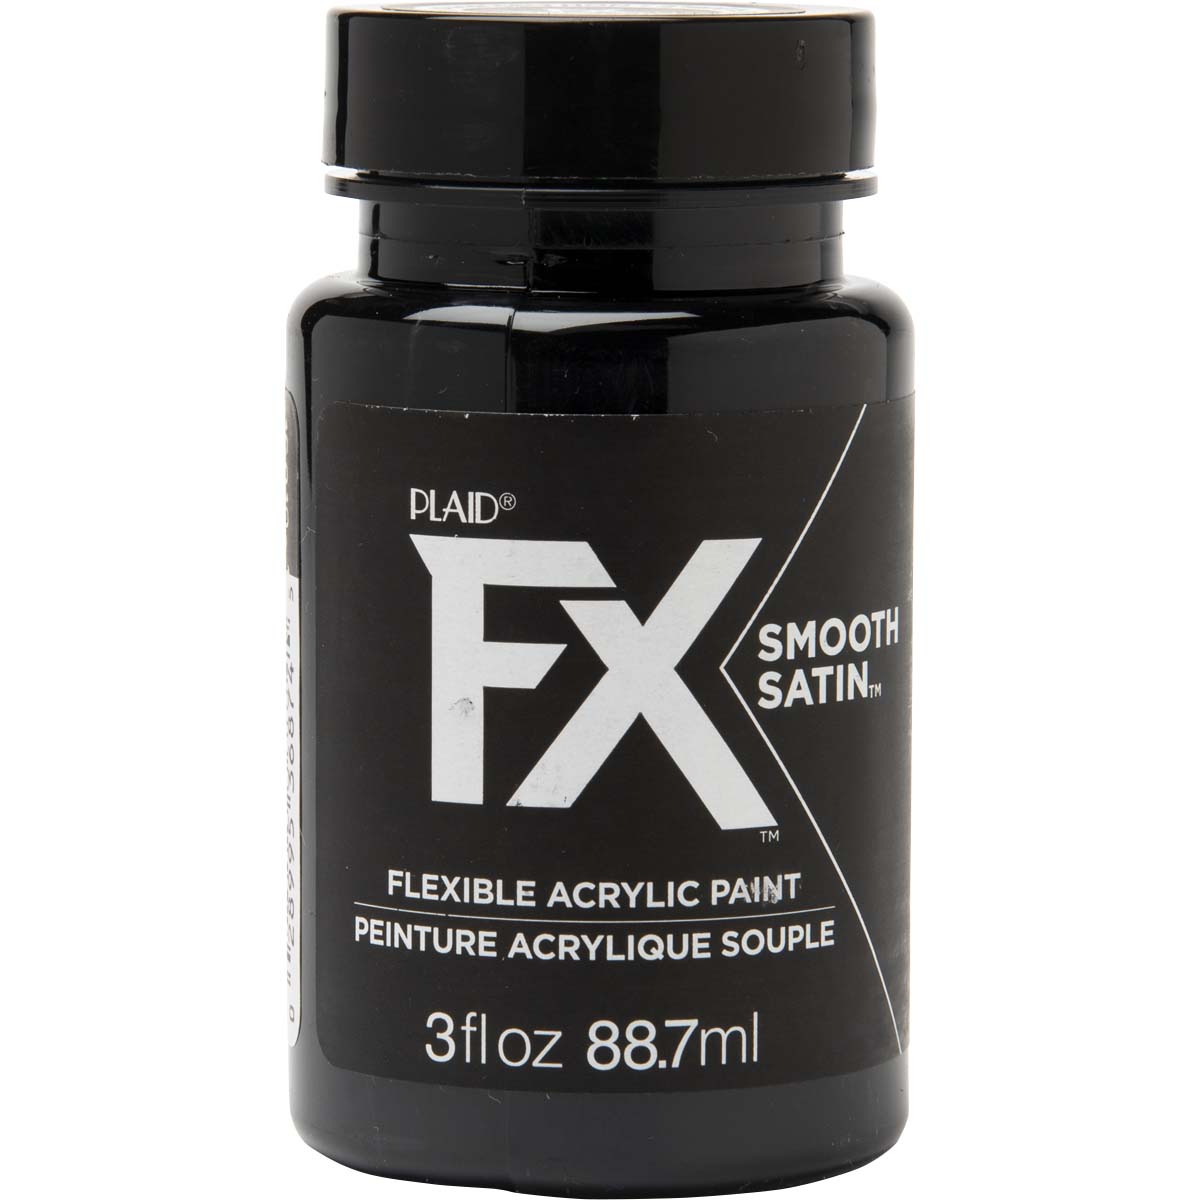 PlaidFX Smooth Satin Flexible Acrylic Paint - Carbon, 3 oz. - 36874